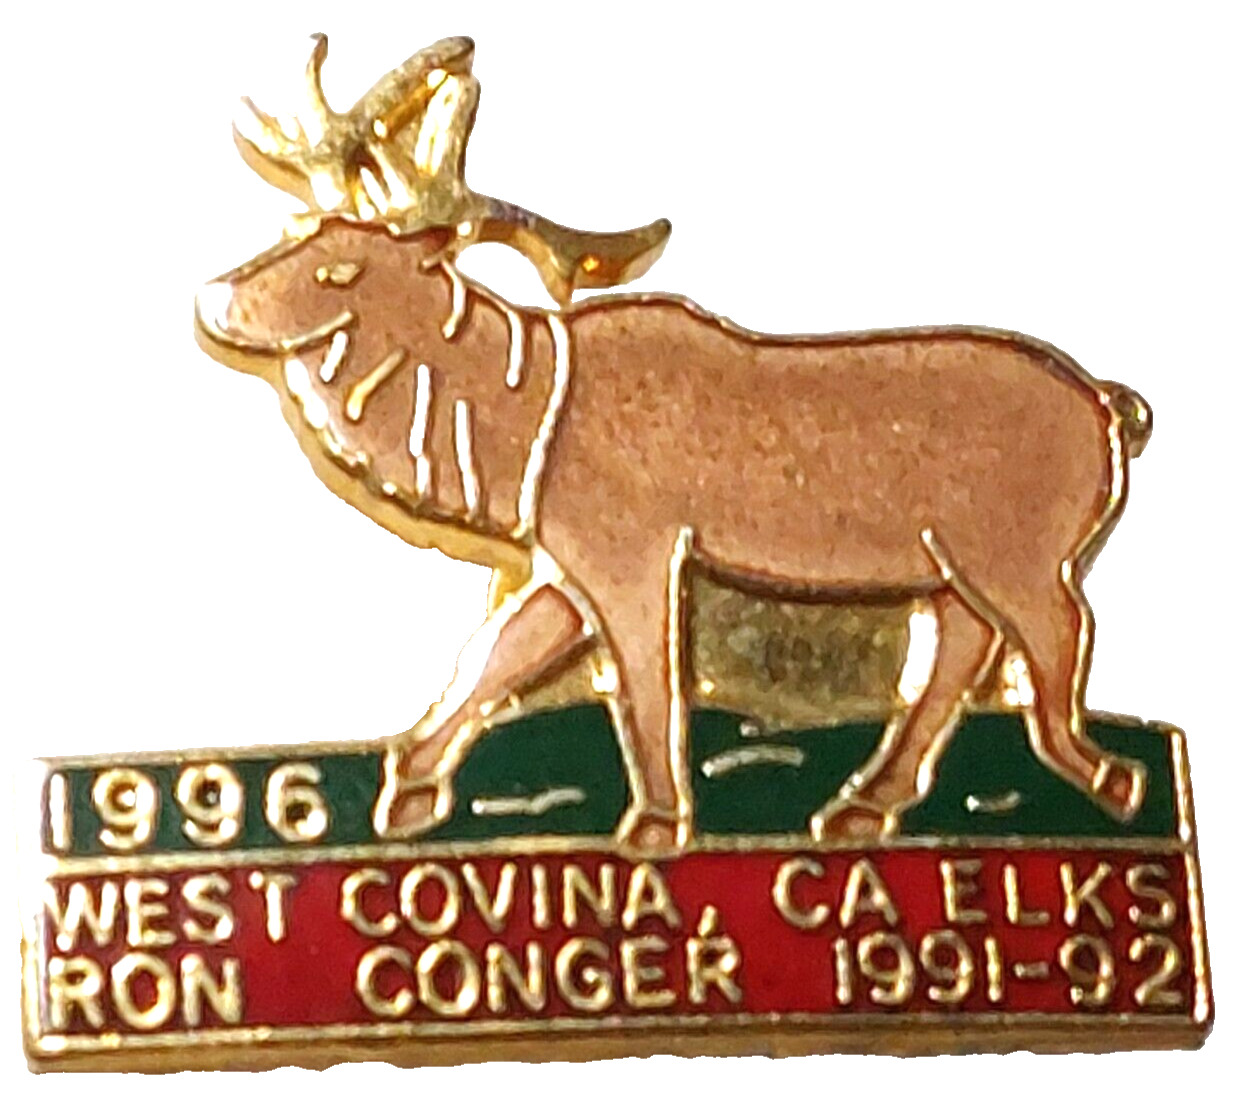 ELKS International BPOE #1996 West Covina CA ER Ron Conger 1991-1992 Lapel Pin